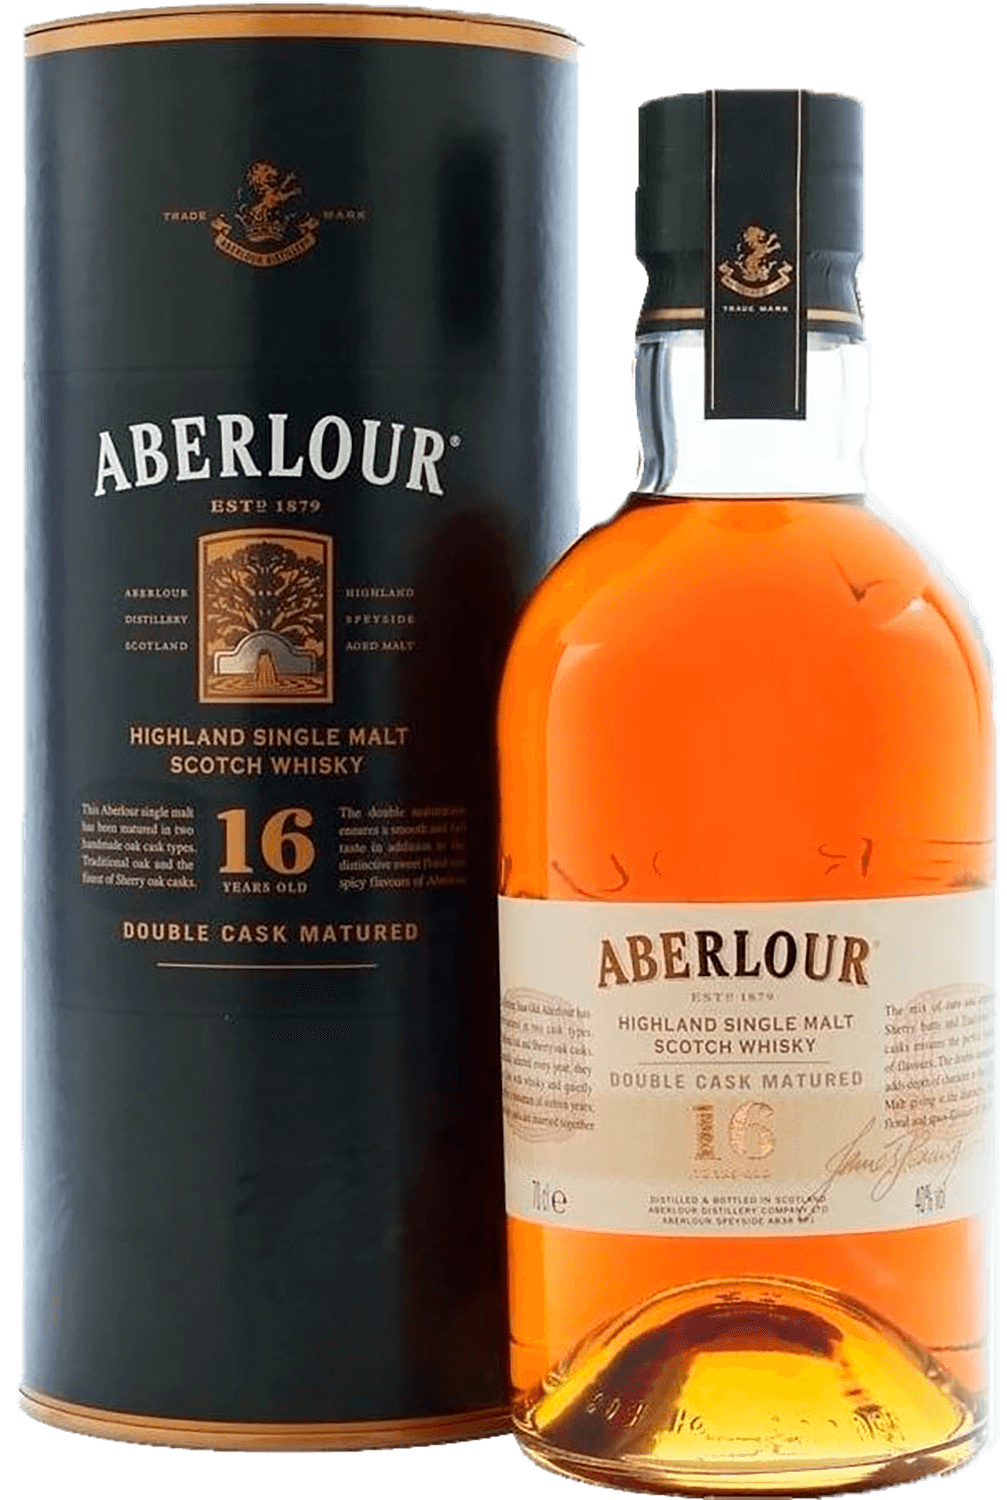 Aberlour Double Cask Matured Highland Single Malt Scotch Whisky 16 y.o. (gift box) macallan triple cask matured highland single malt scotch whisky 12 y o